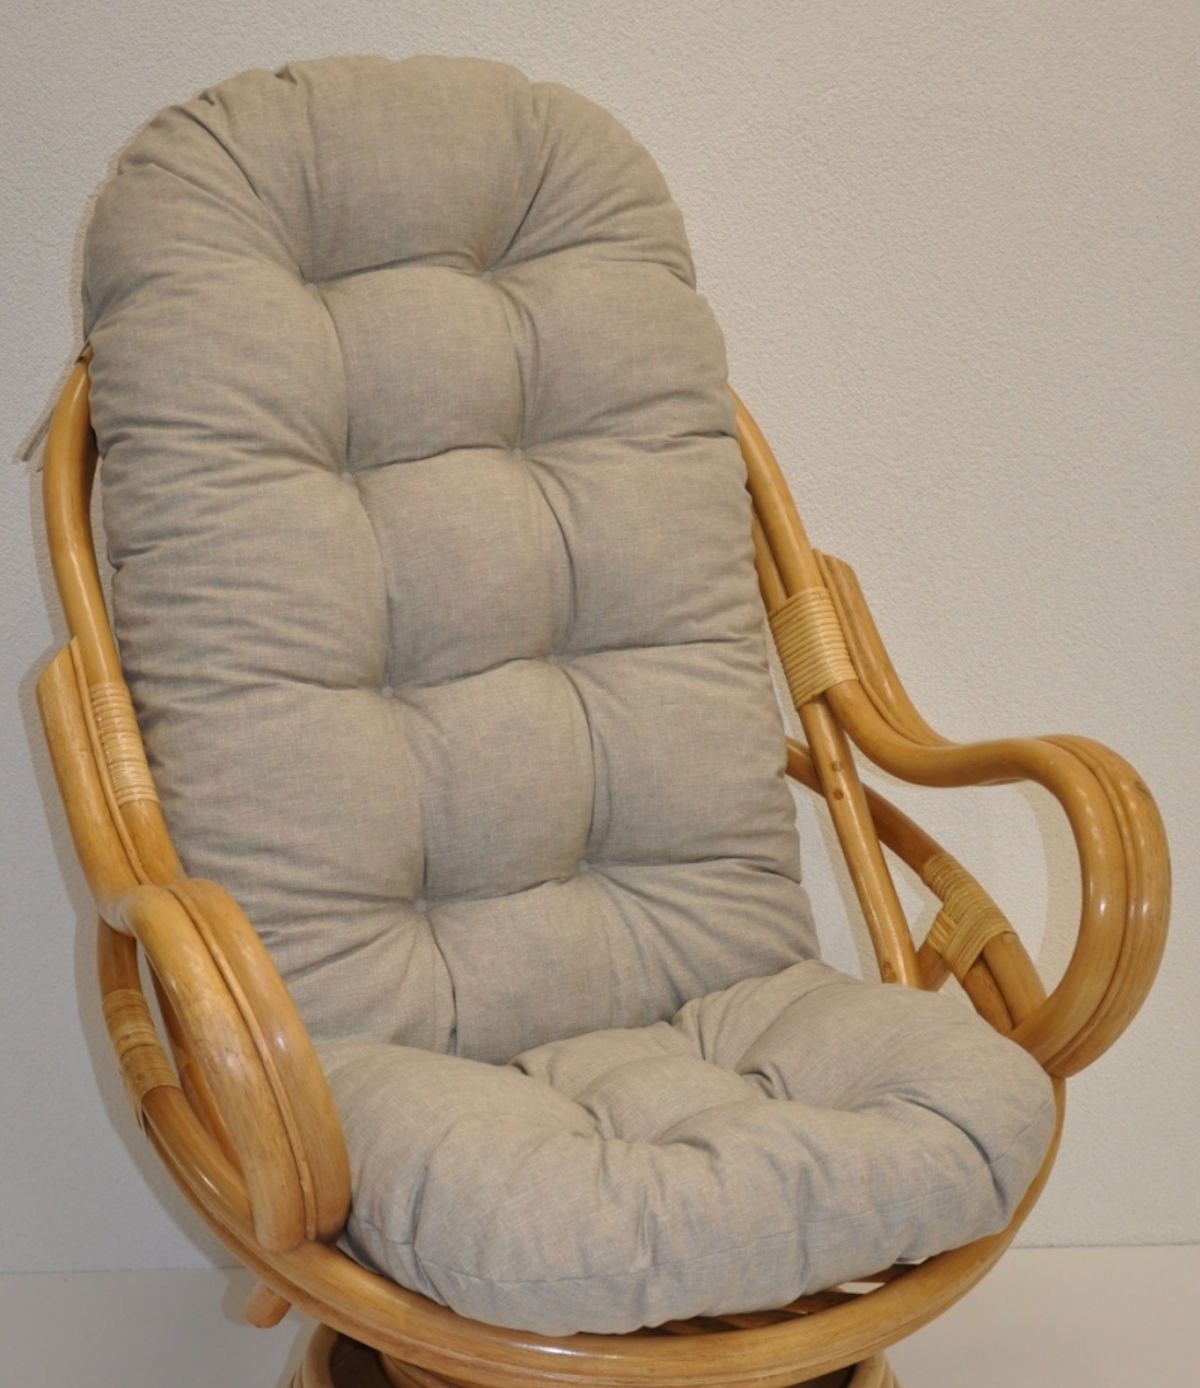 Rattani Sesselauflage Polster für Rattan Schaukelstuhl Drehsessel L 135 cm Color soft grau | Sessel-Erhöhungen